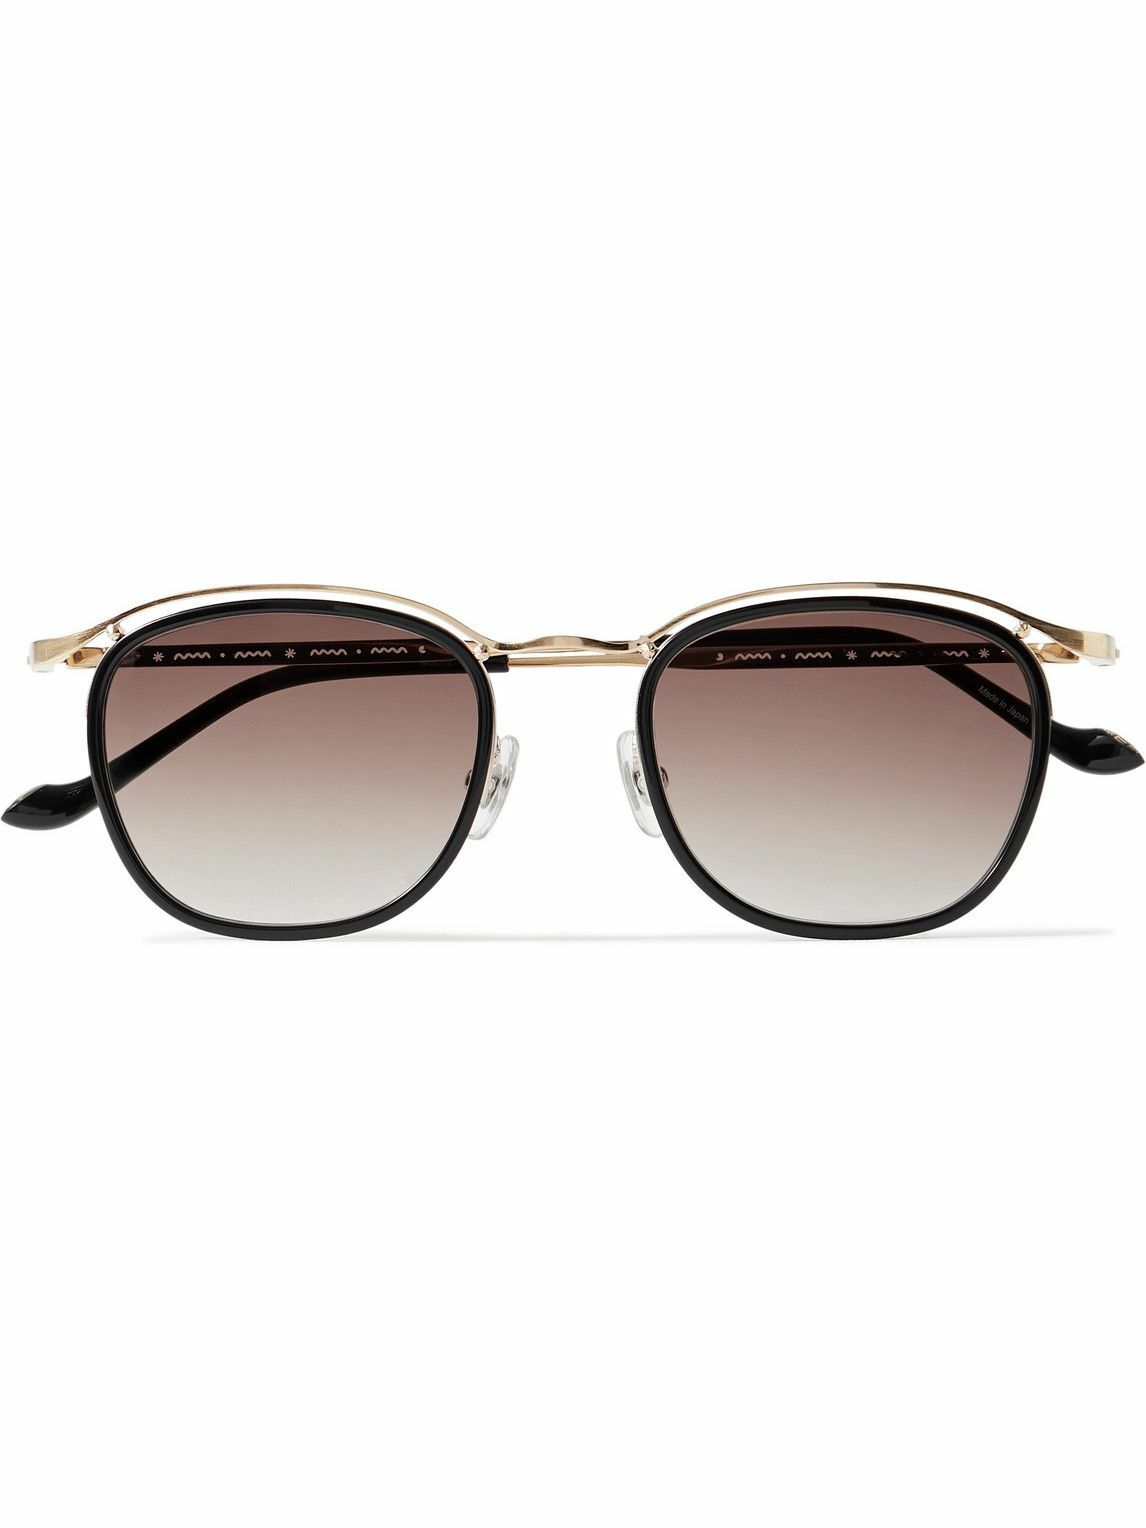 Matsuda - Round-Frame Gold-Tone and Acetate Sunglasses Matsuda